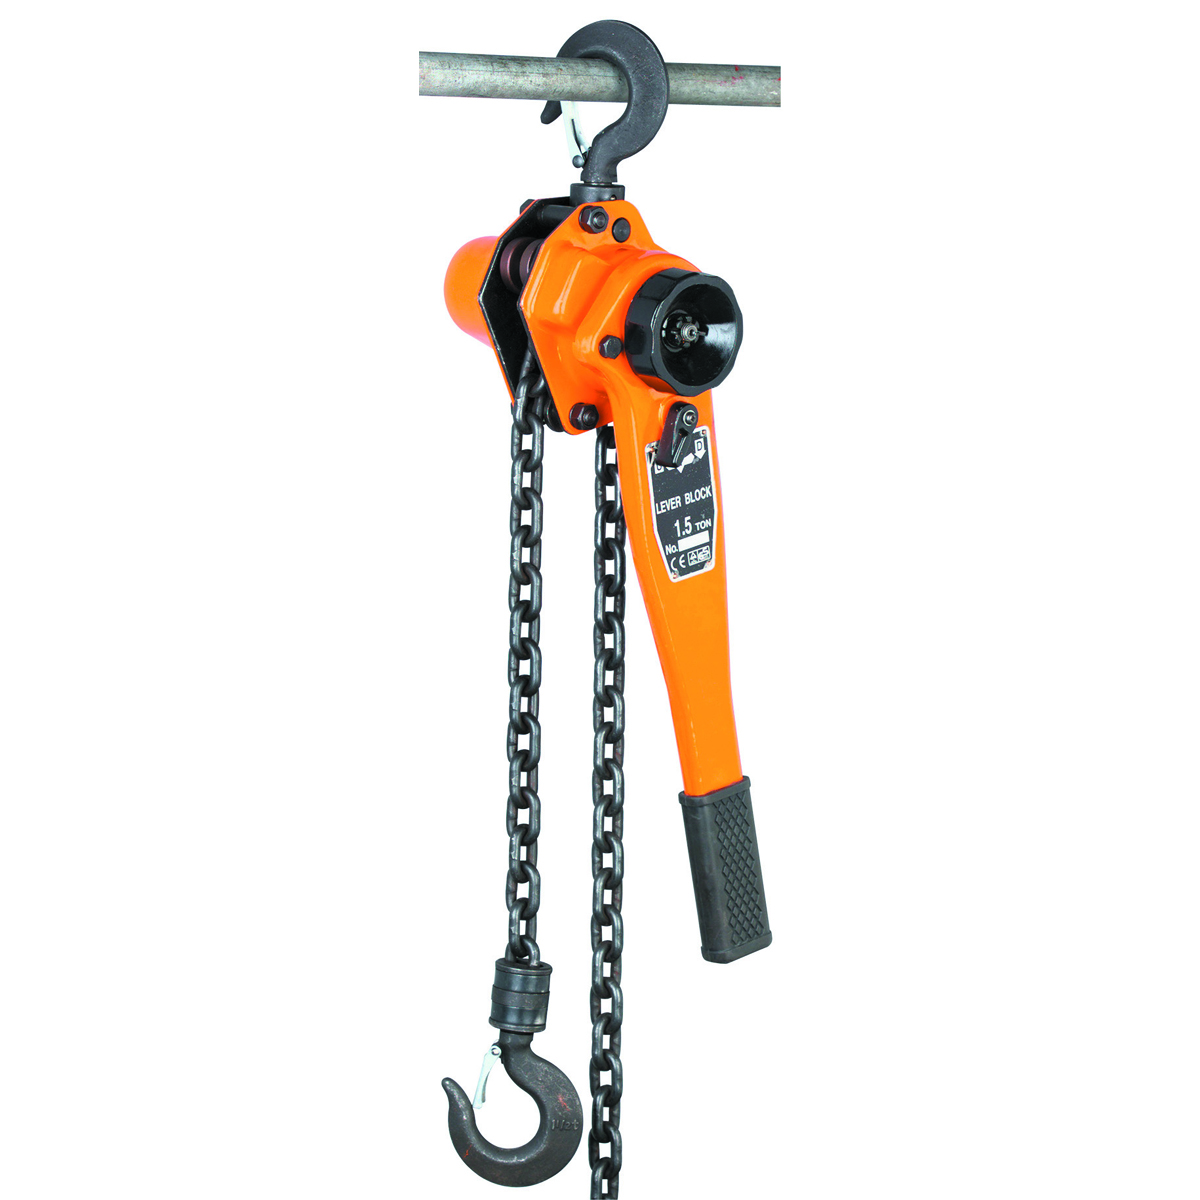 HAUL-MASTER 1-1/2 ton Lever Manual Chain Hoist – Item 66106 / 33003